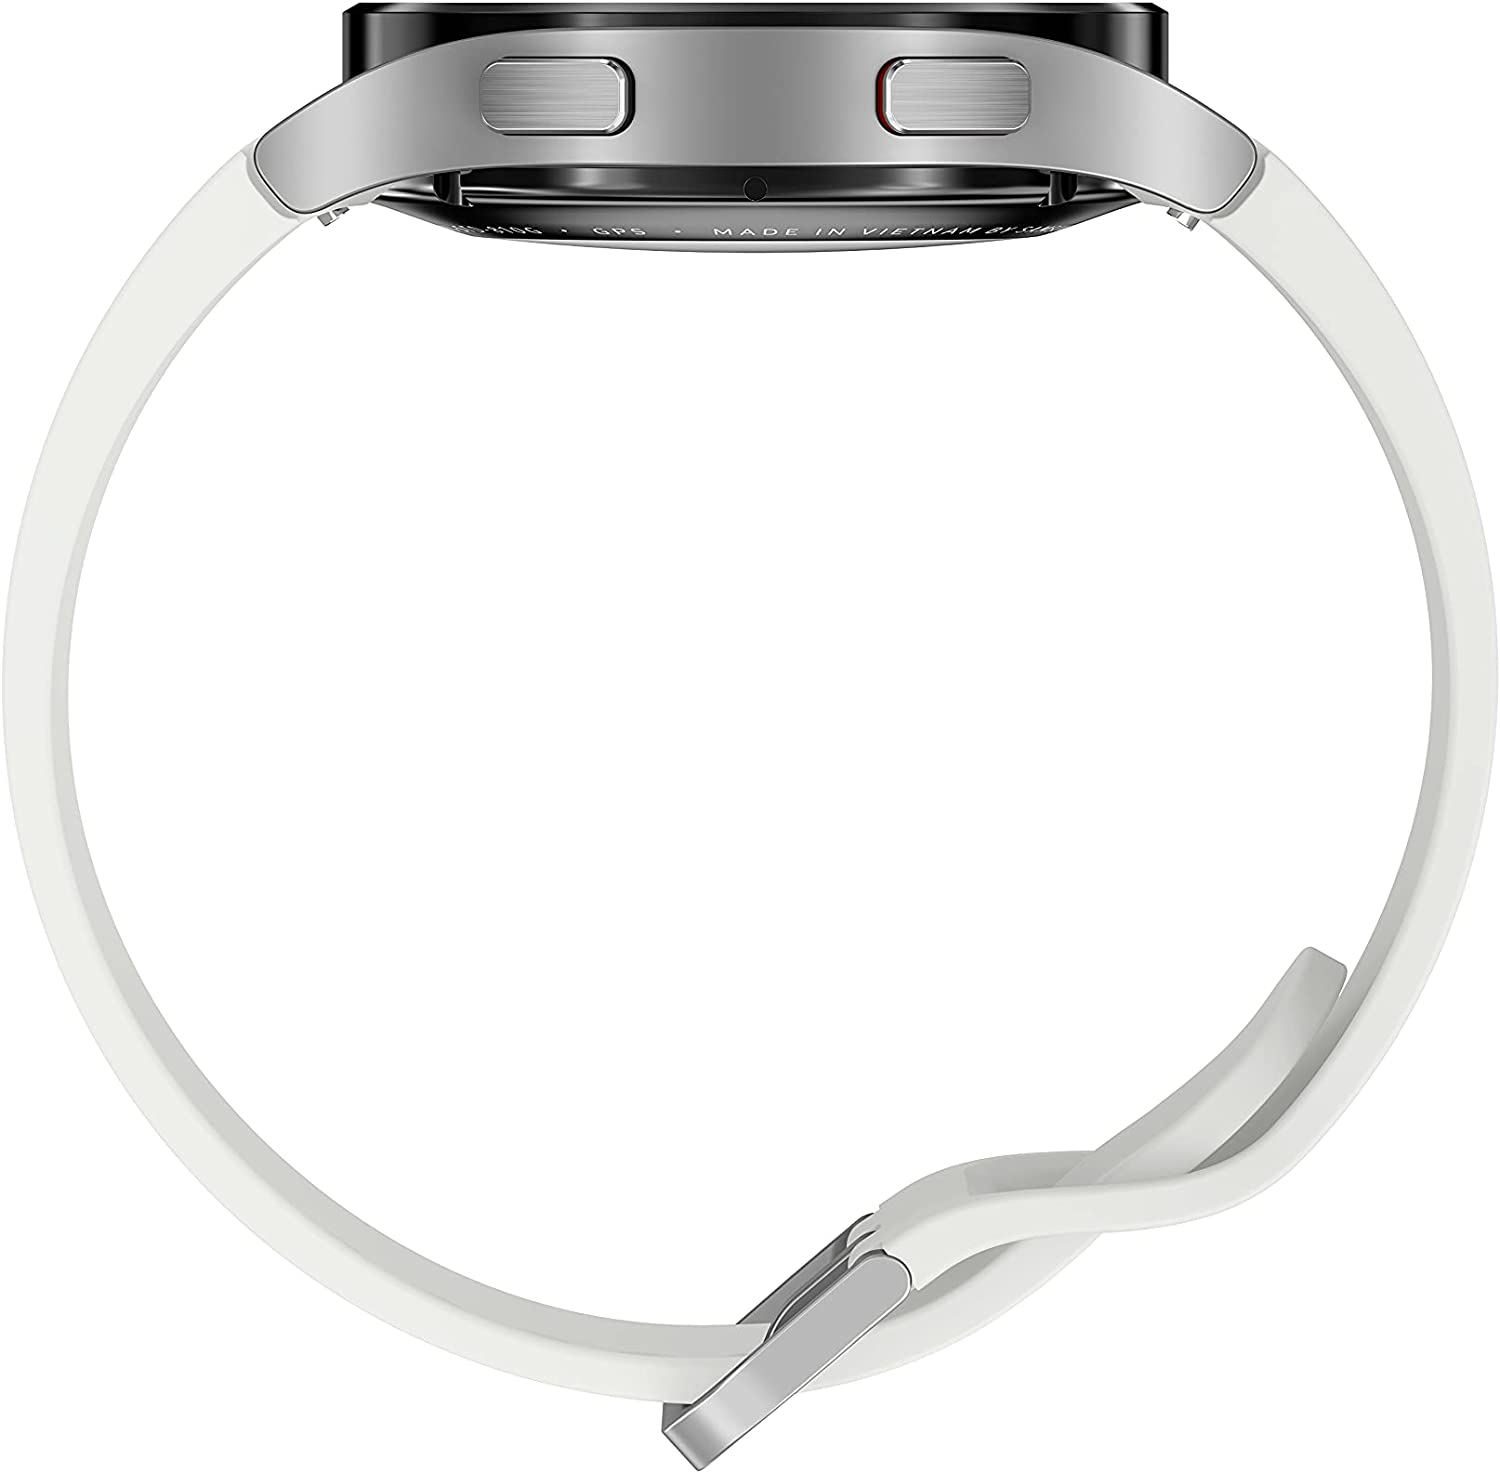 Samsung Galaxy Watch 4 size 40 mm